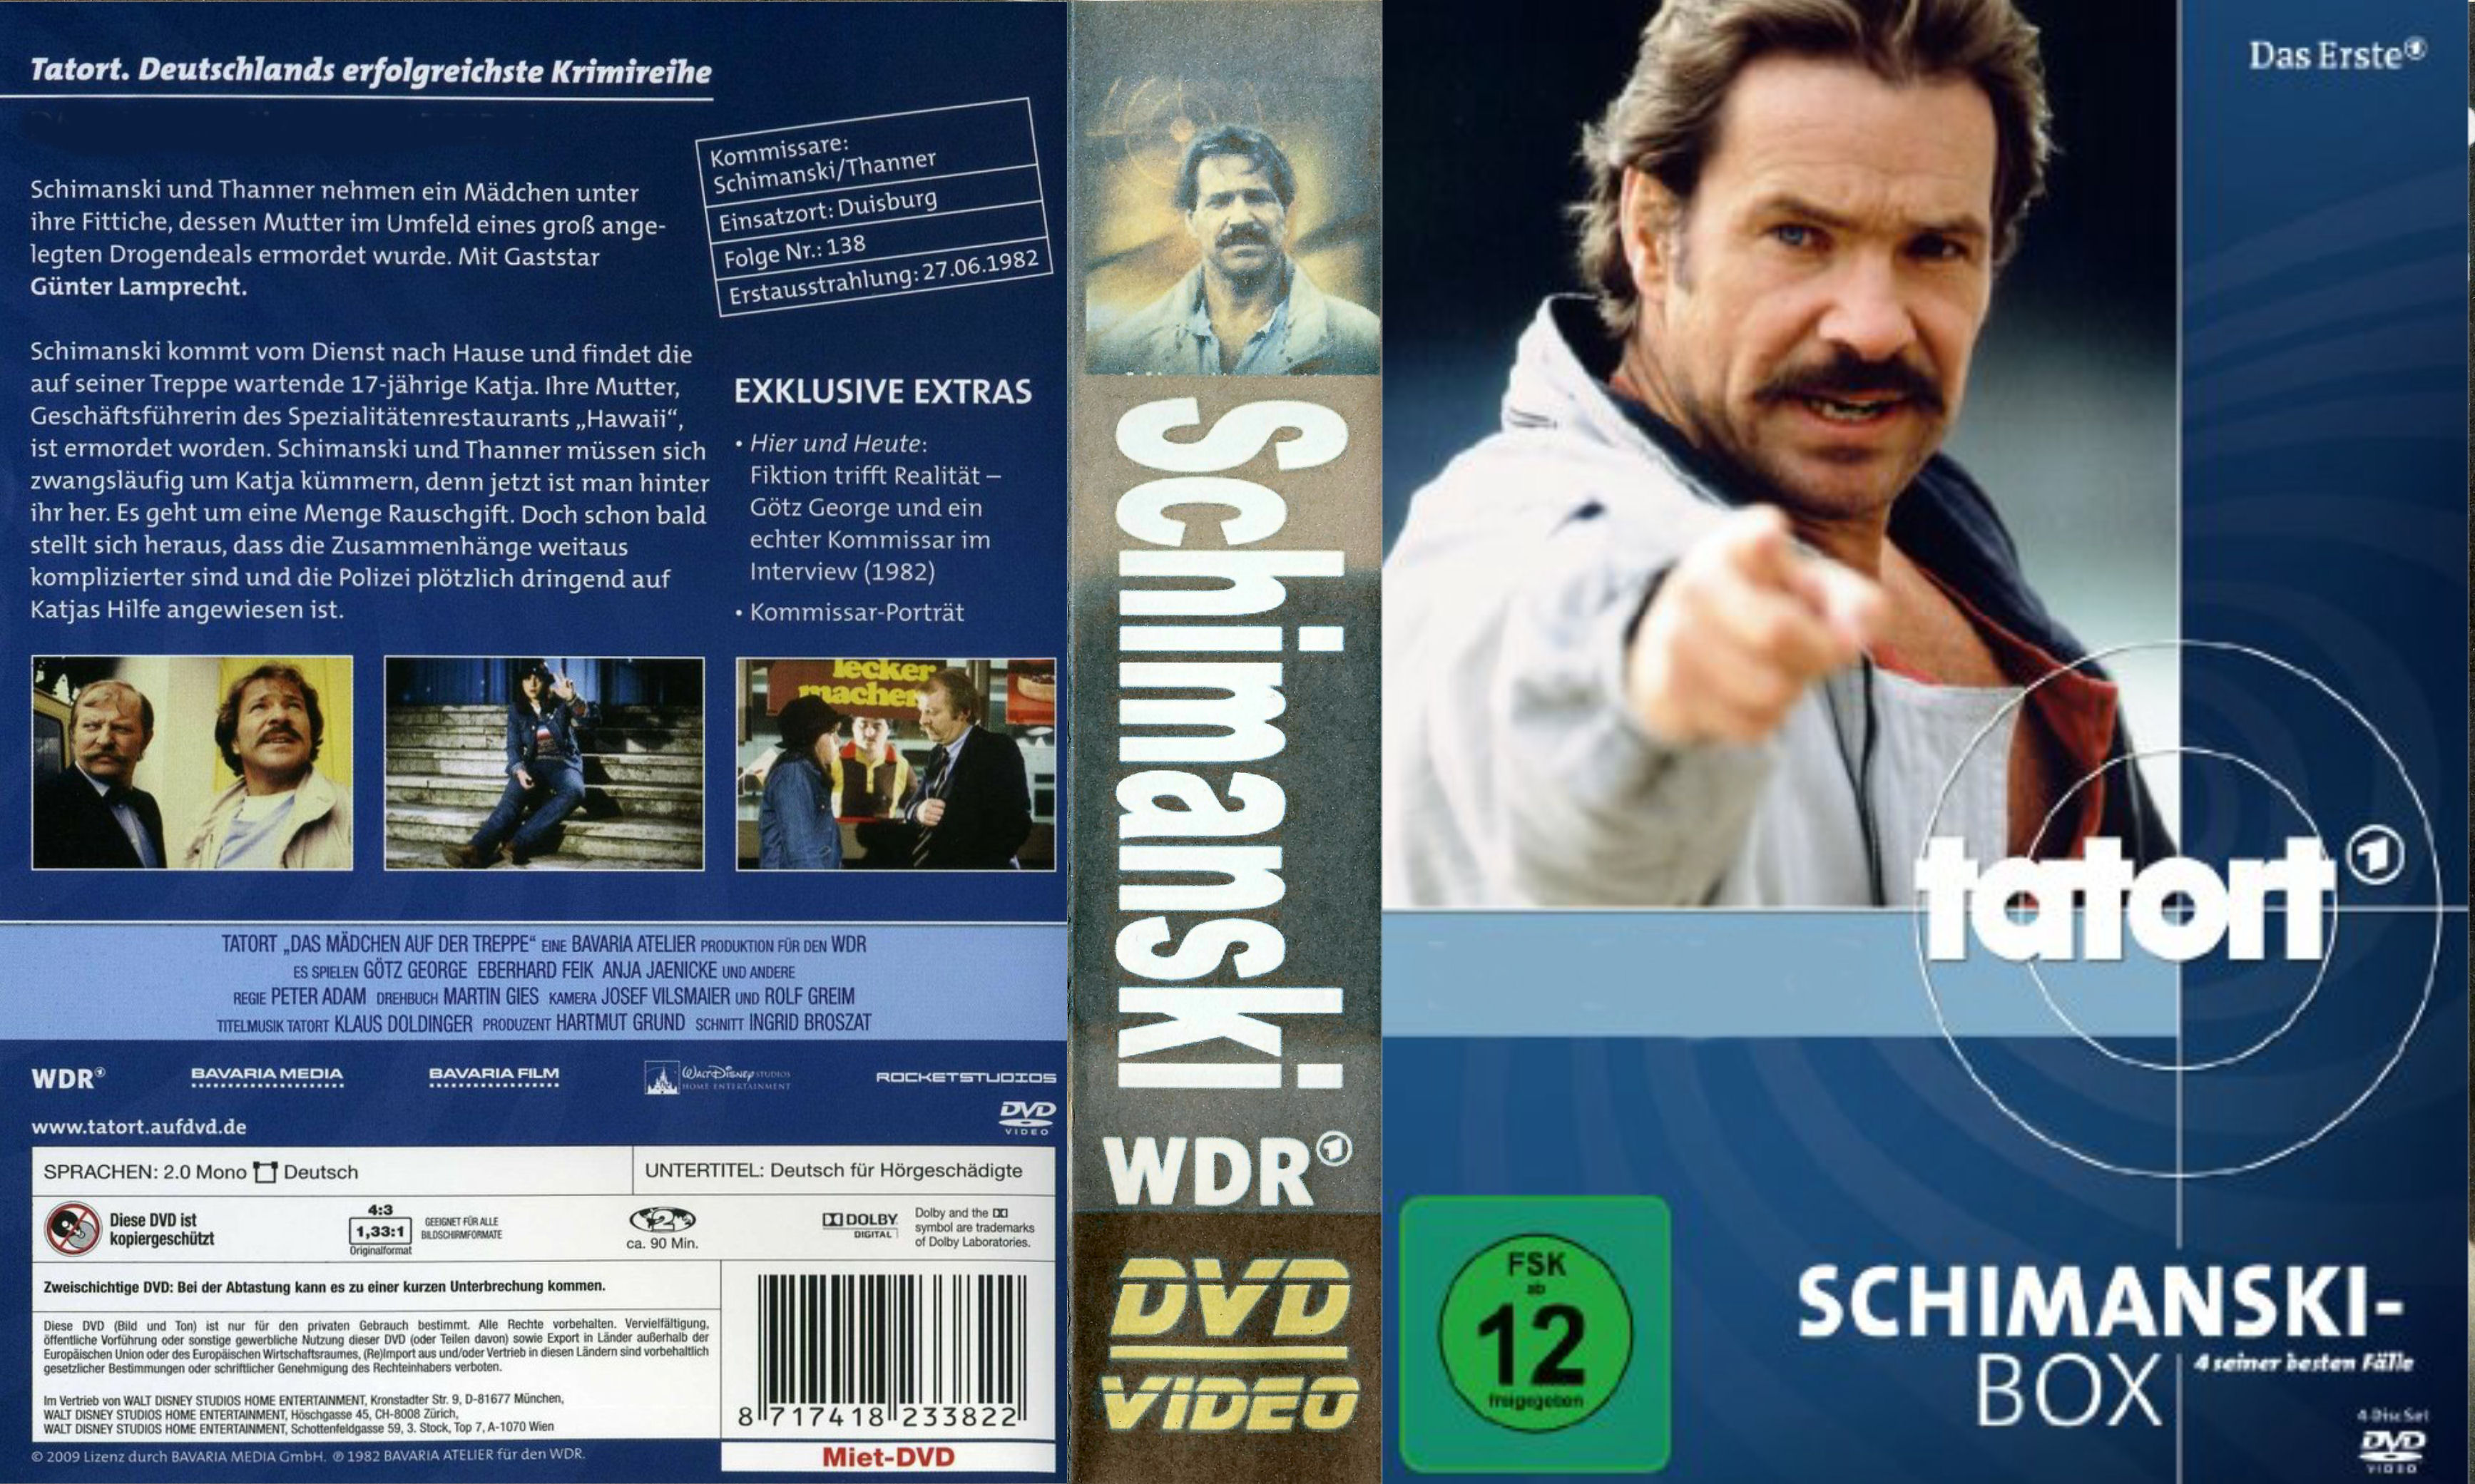 Schimanski Collectie Tatort No Subs - DvD 21